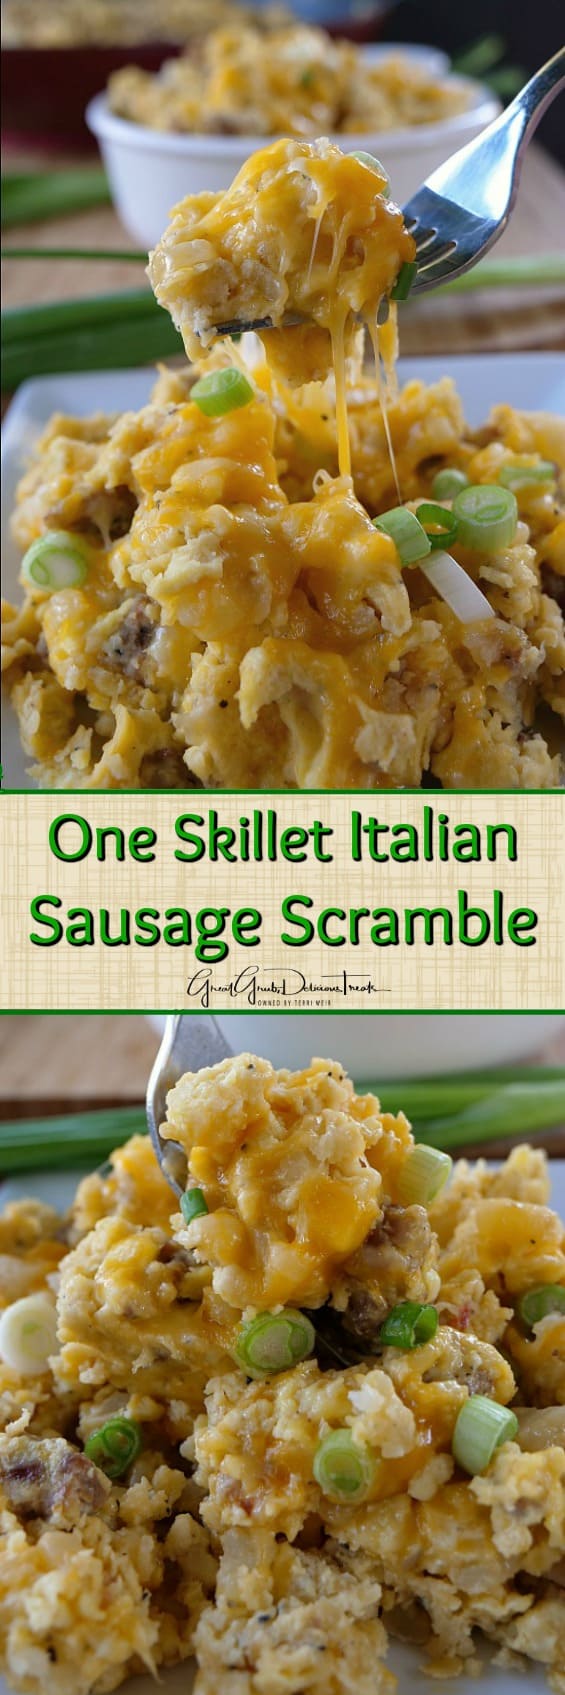 One Skillet Italian Sausage Scramble